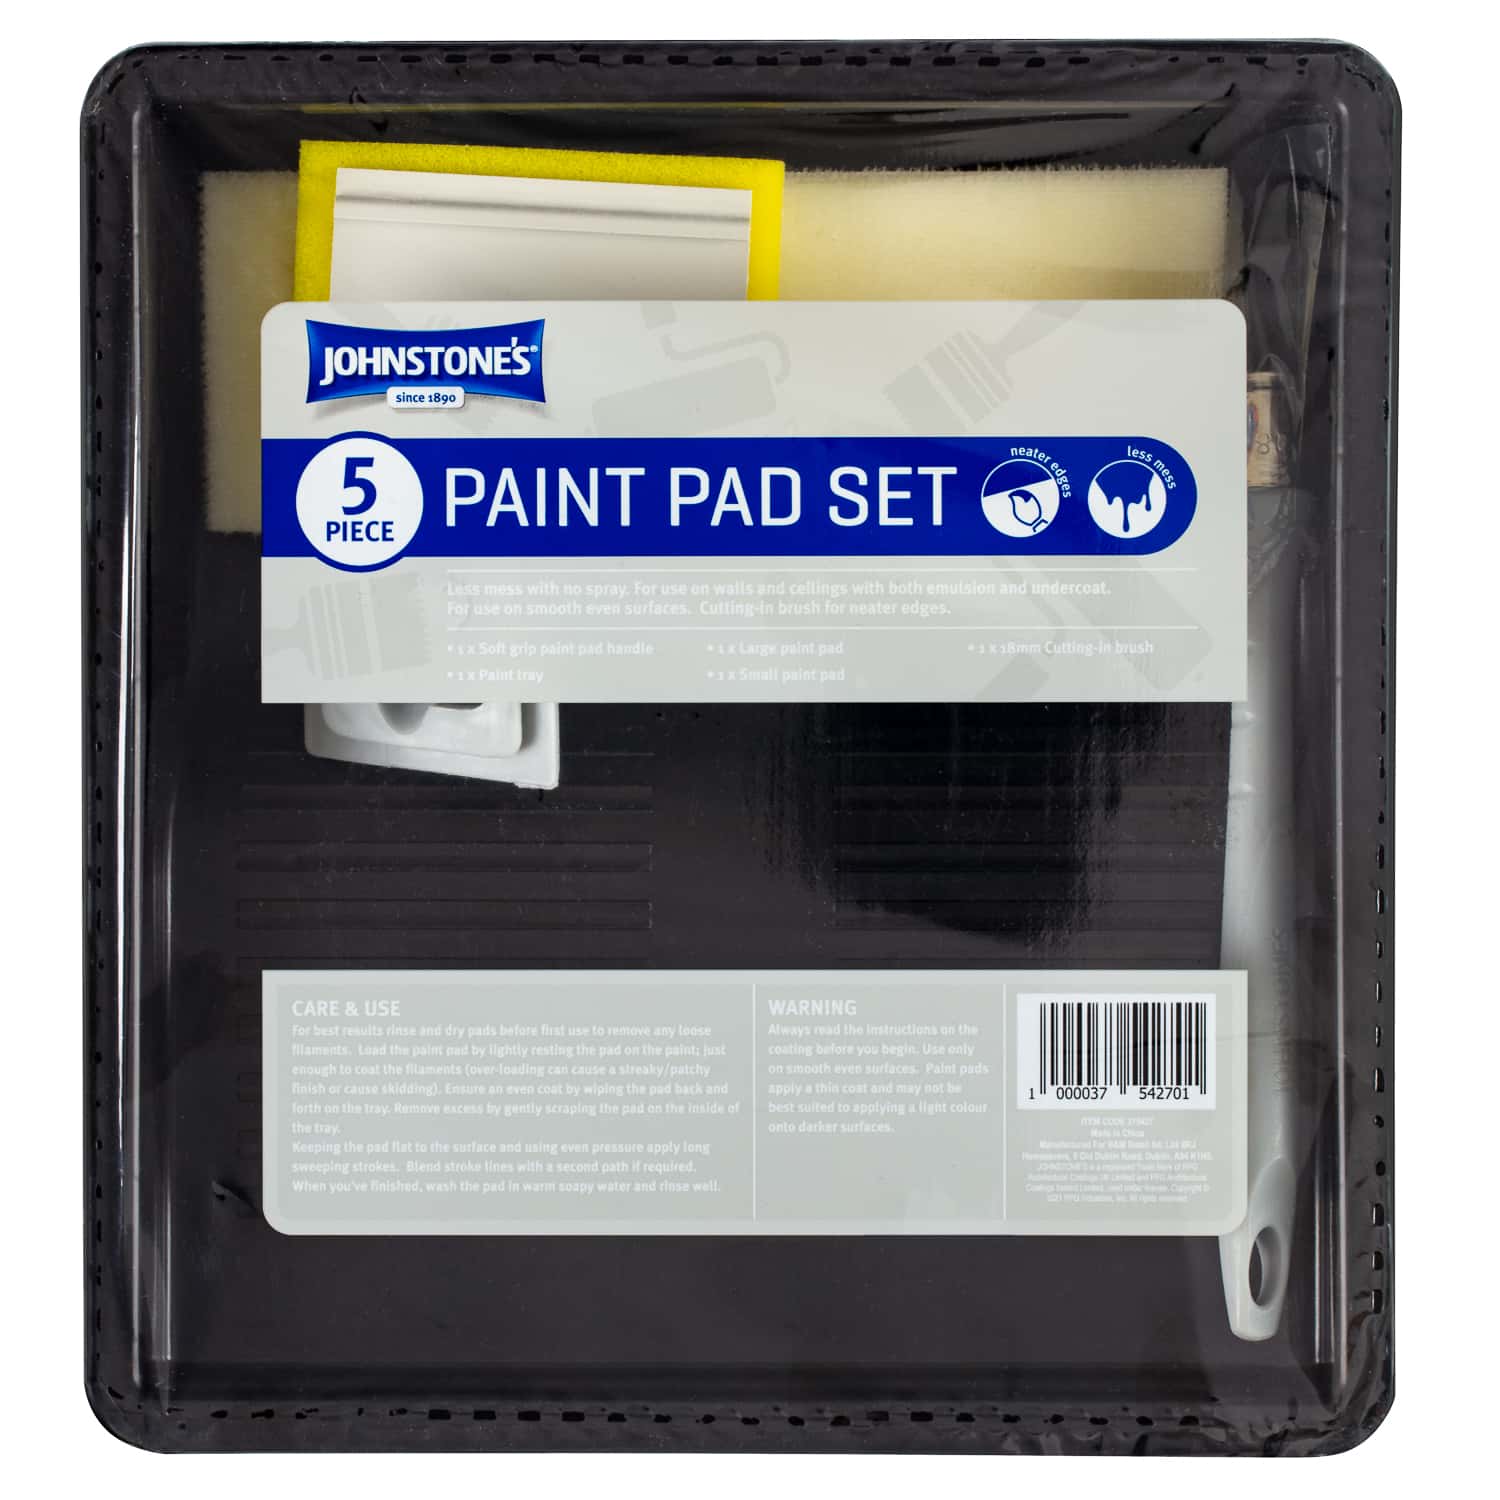 Johnstone's Paint Pad Set 5pk